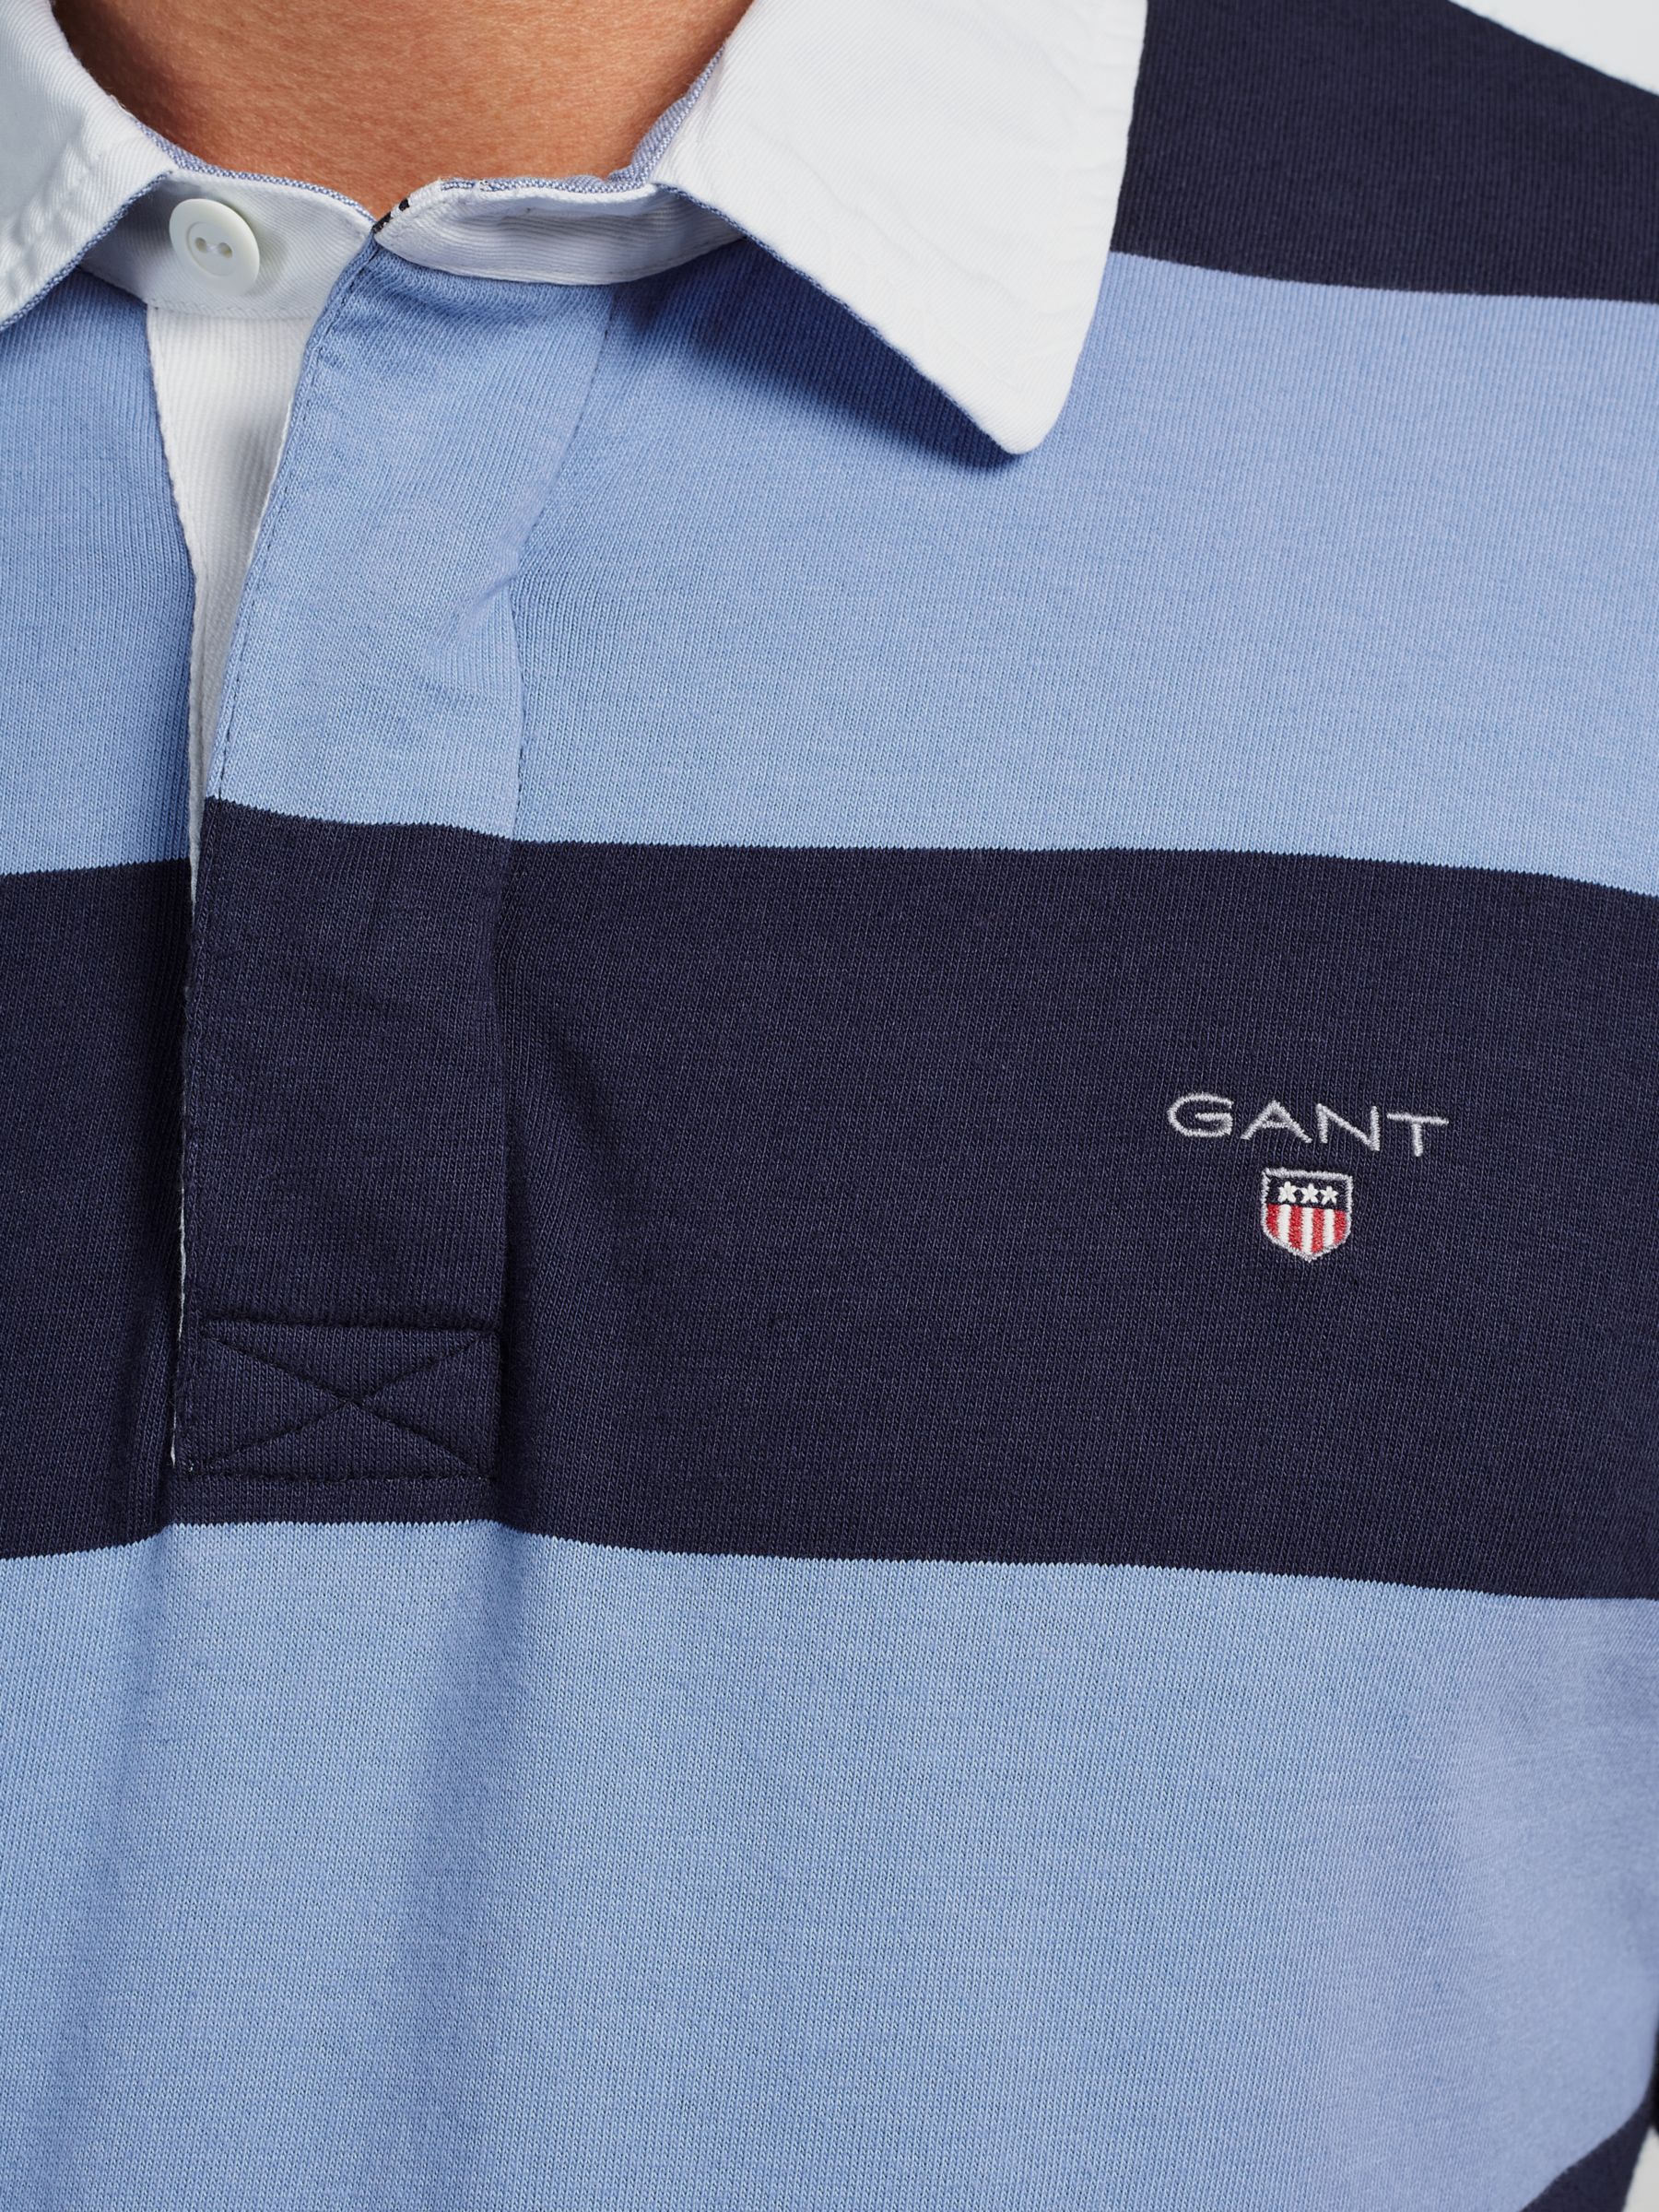 Gant Original Bar Stripe Heavy Rugby Shirt | Navy/Lavender Blue at John ...